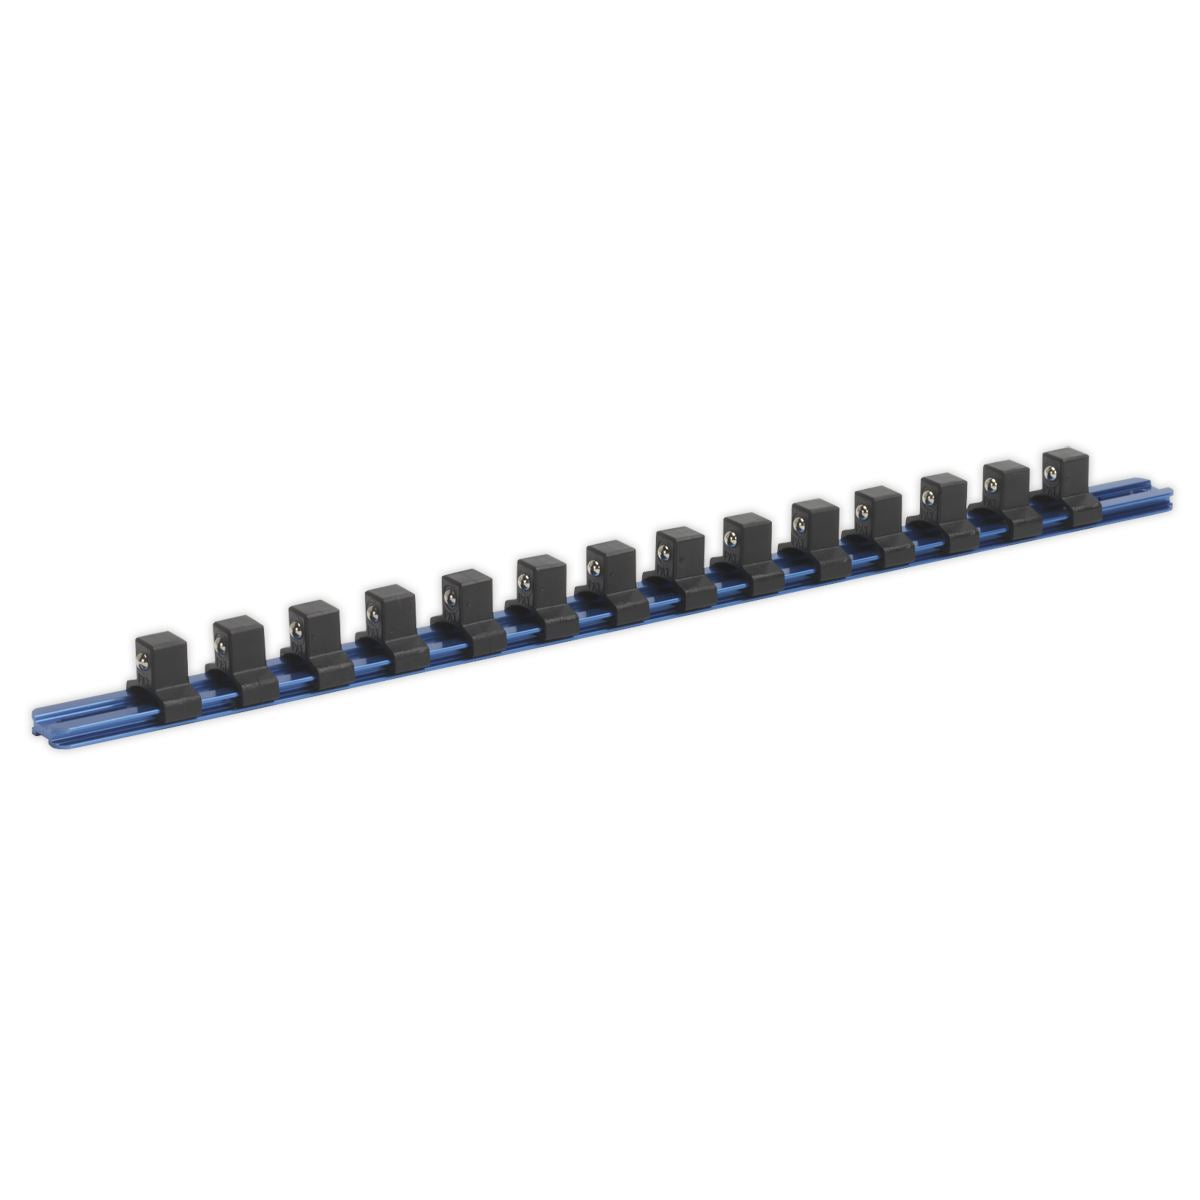 Sealey Premier Socket Retaining Rail with 14 Clips Aluminium 1/2"Sq Drive